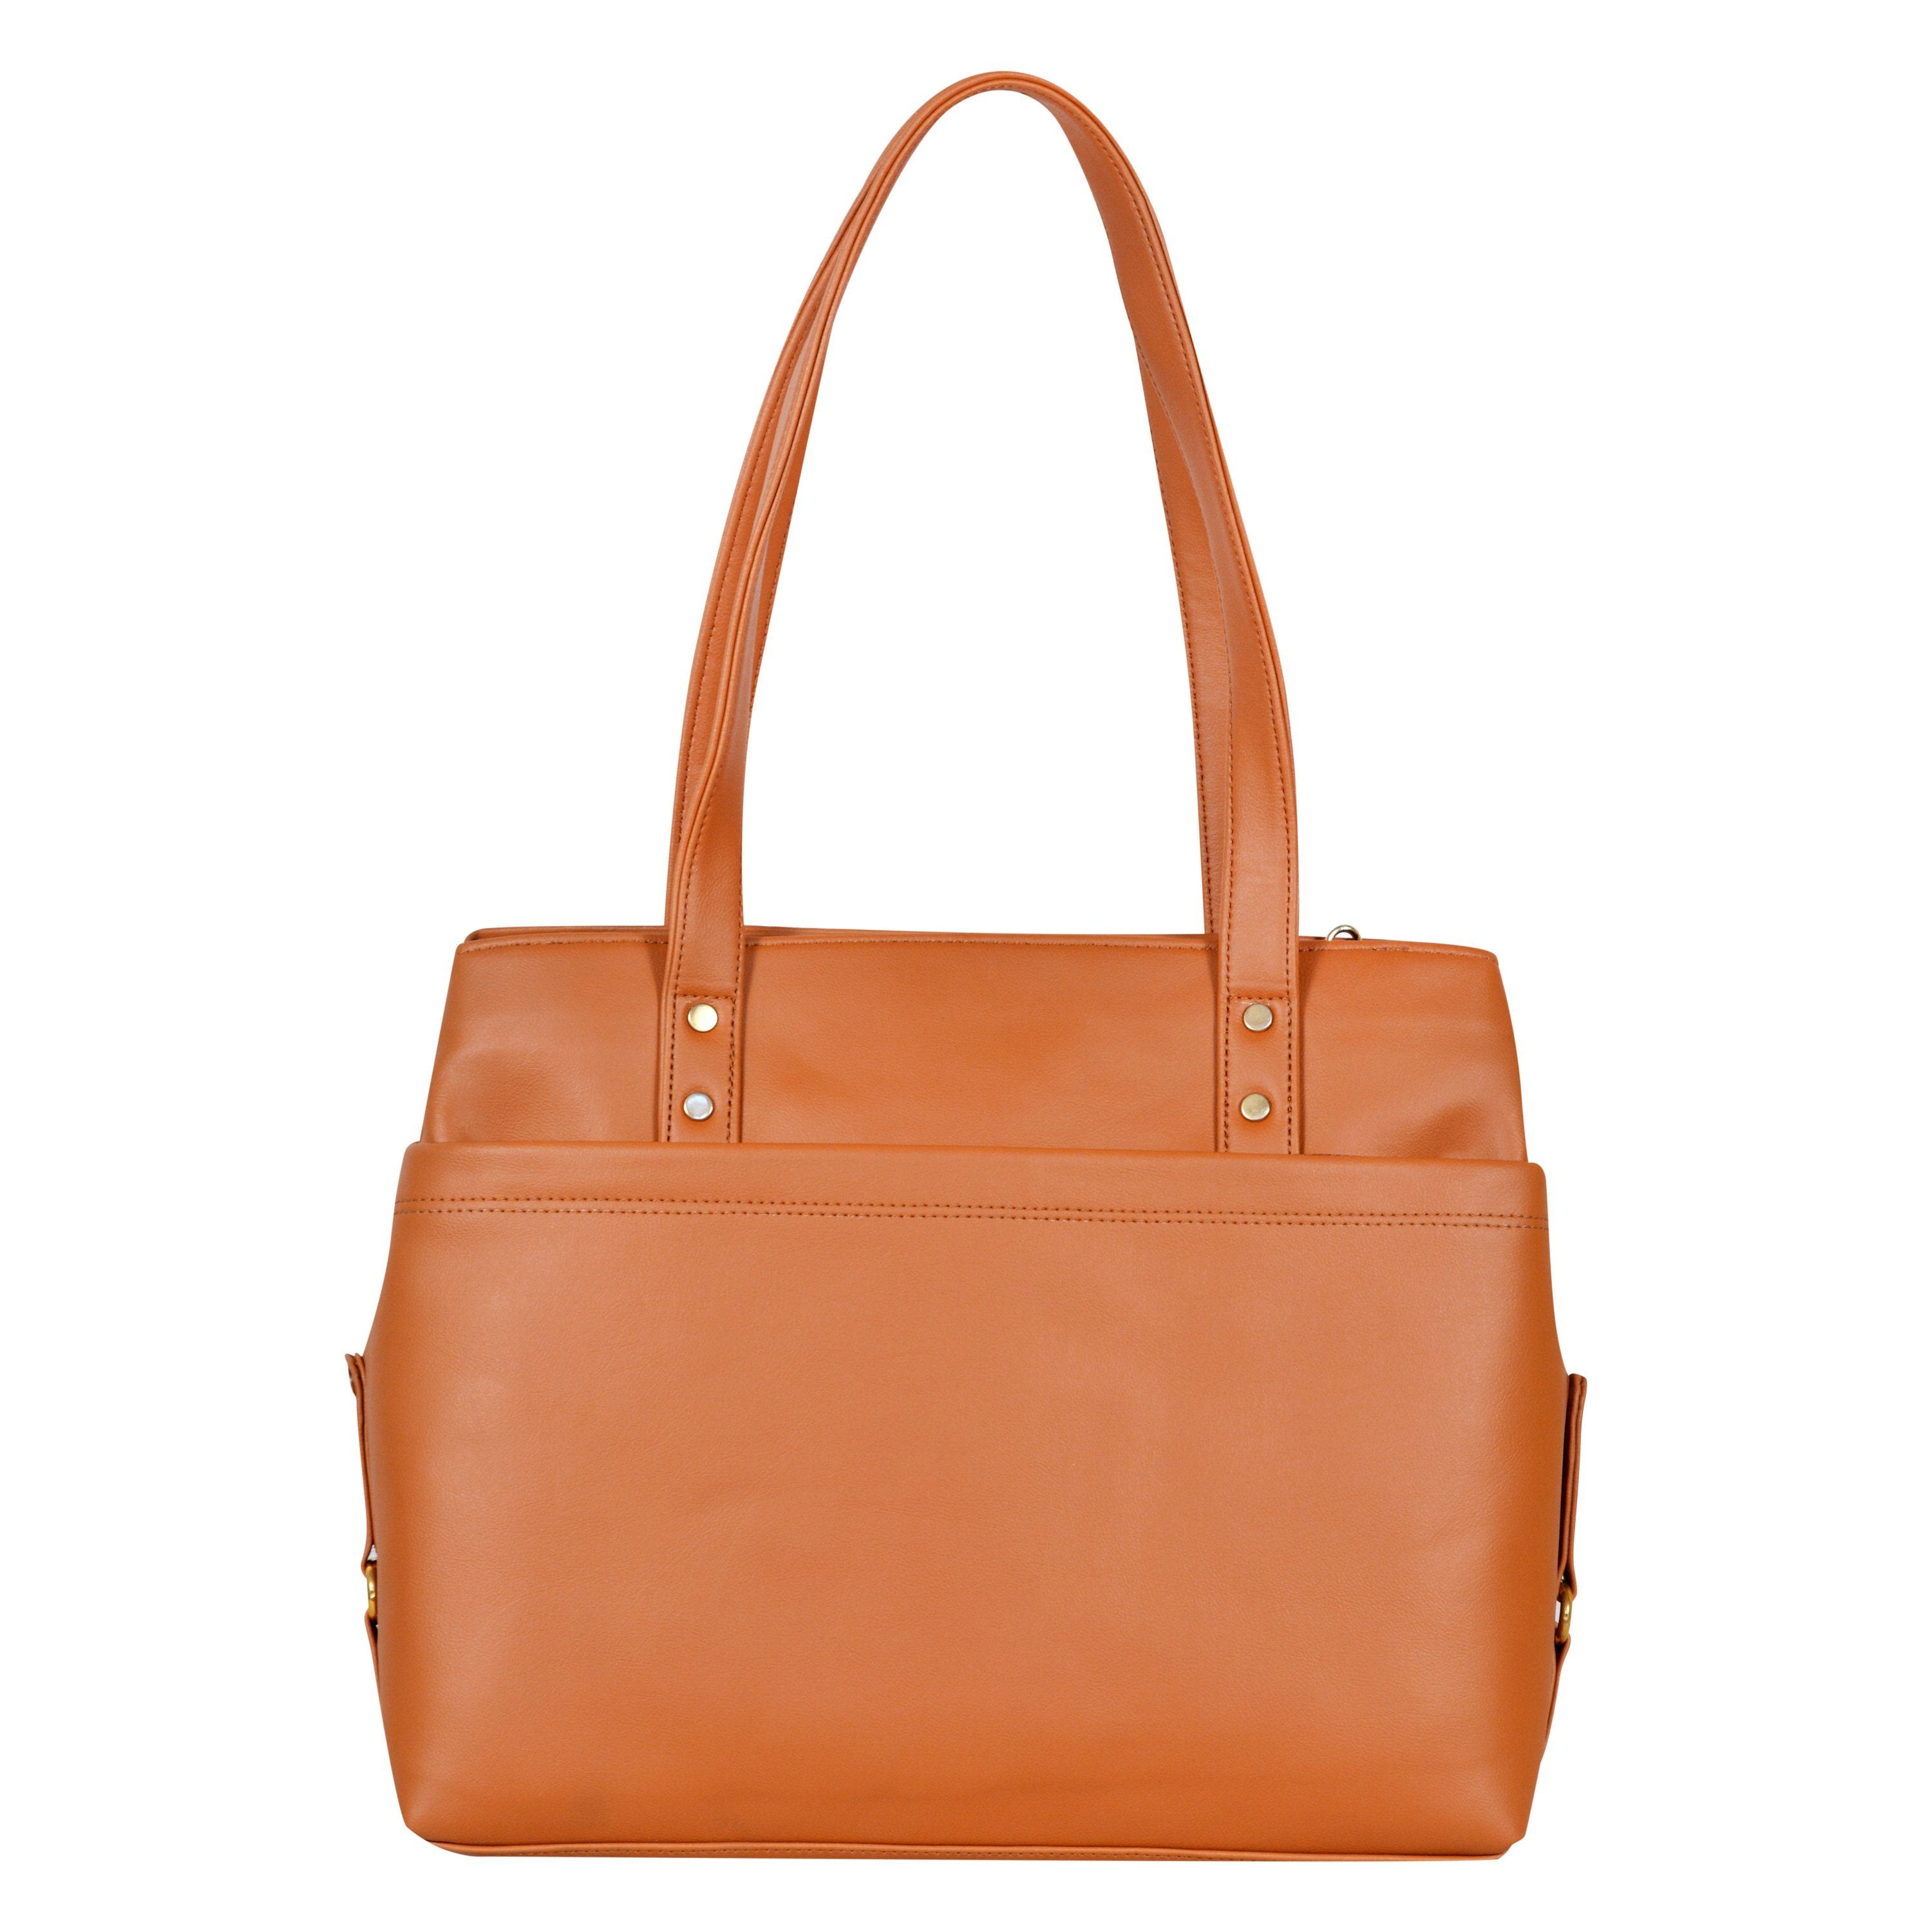 Handbags for Women Ladies Tote Shoulder Bags Satchel Top Handle Satchel Purse  Bag in Pretty Color Combination (Deep Blue-Pink) - Walmart.com